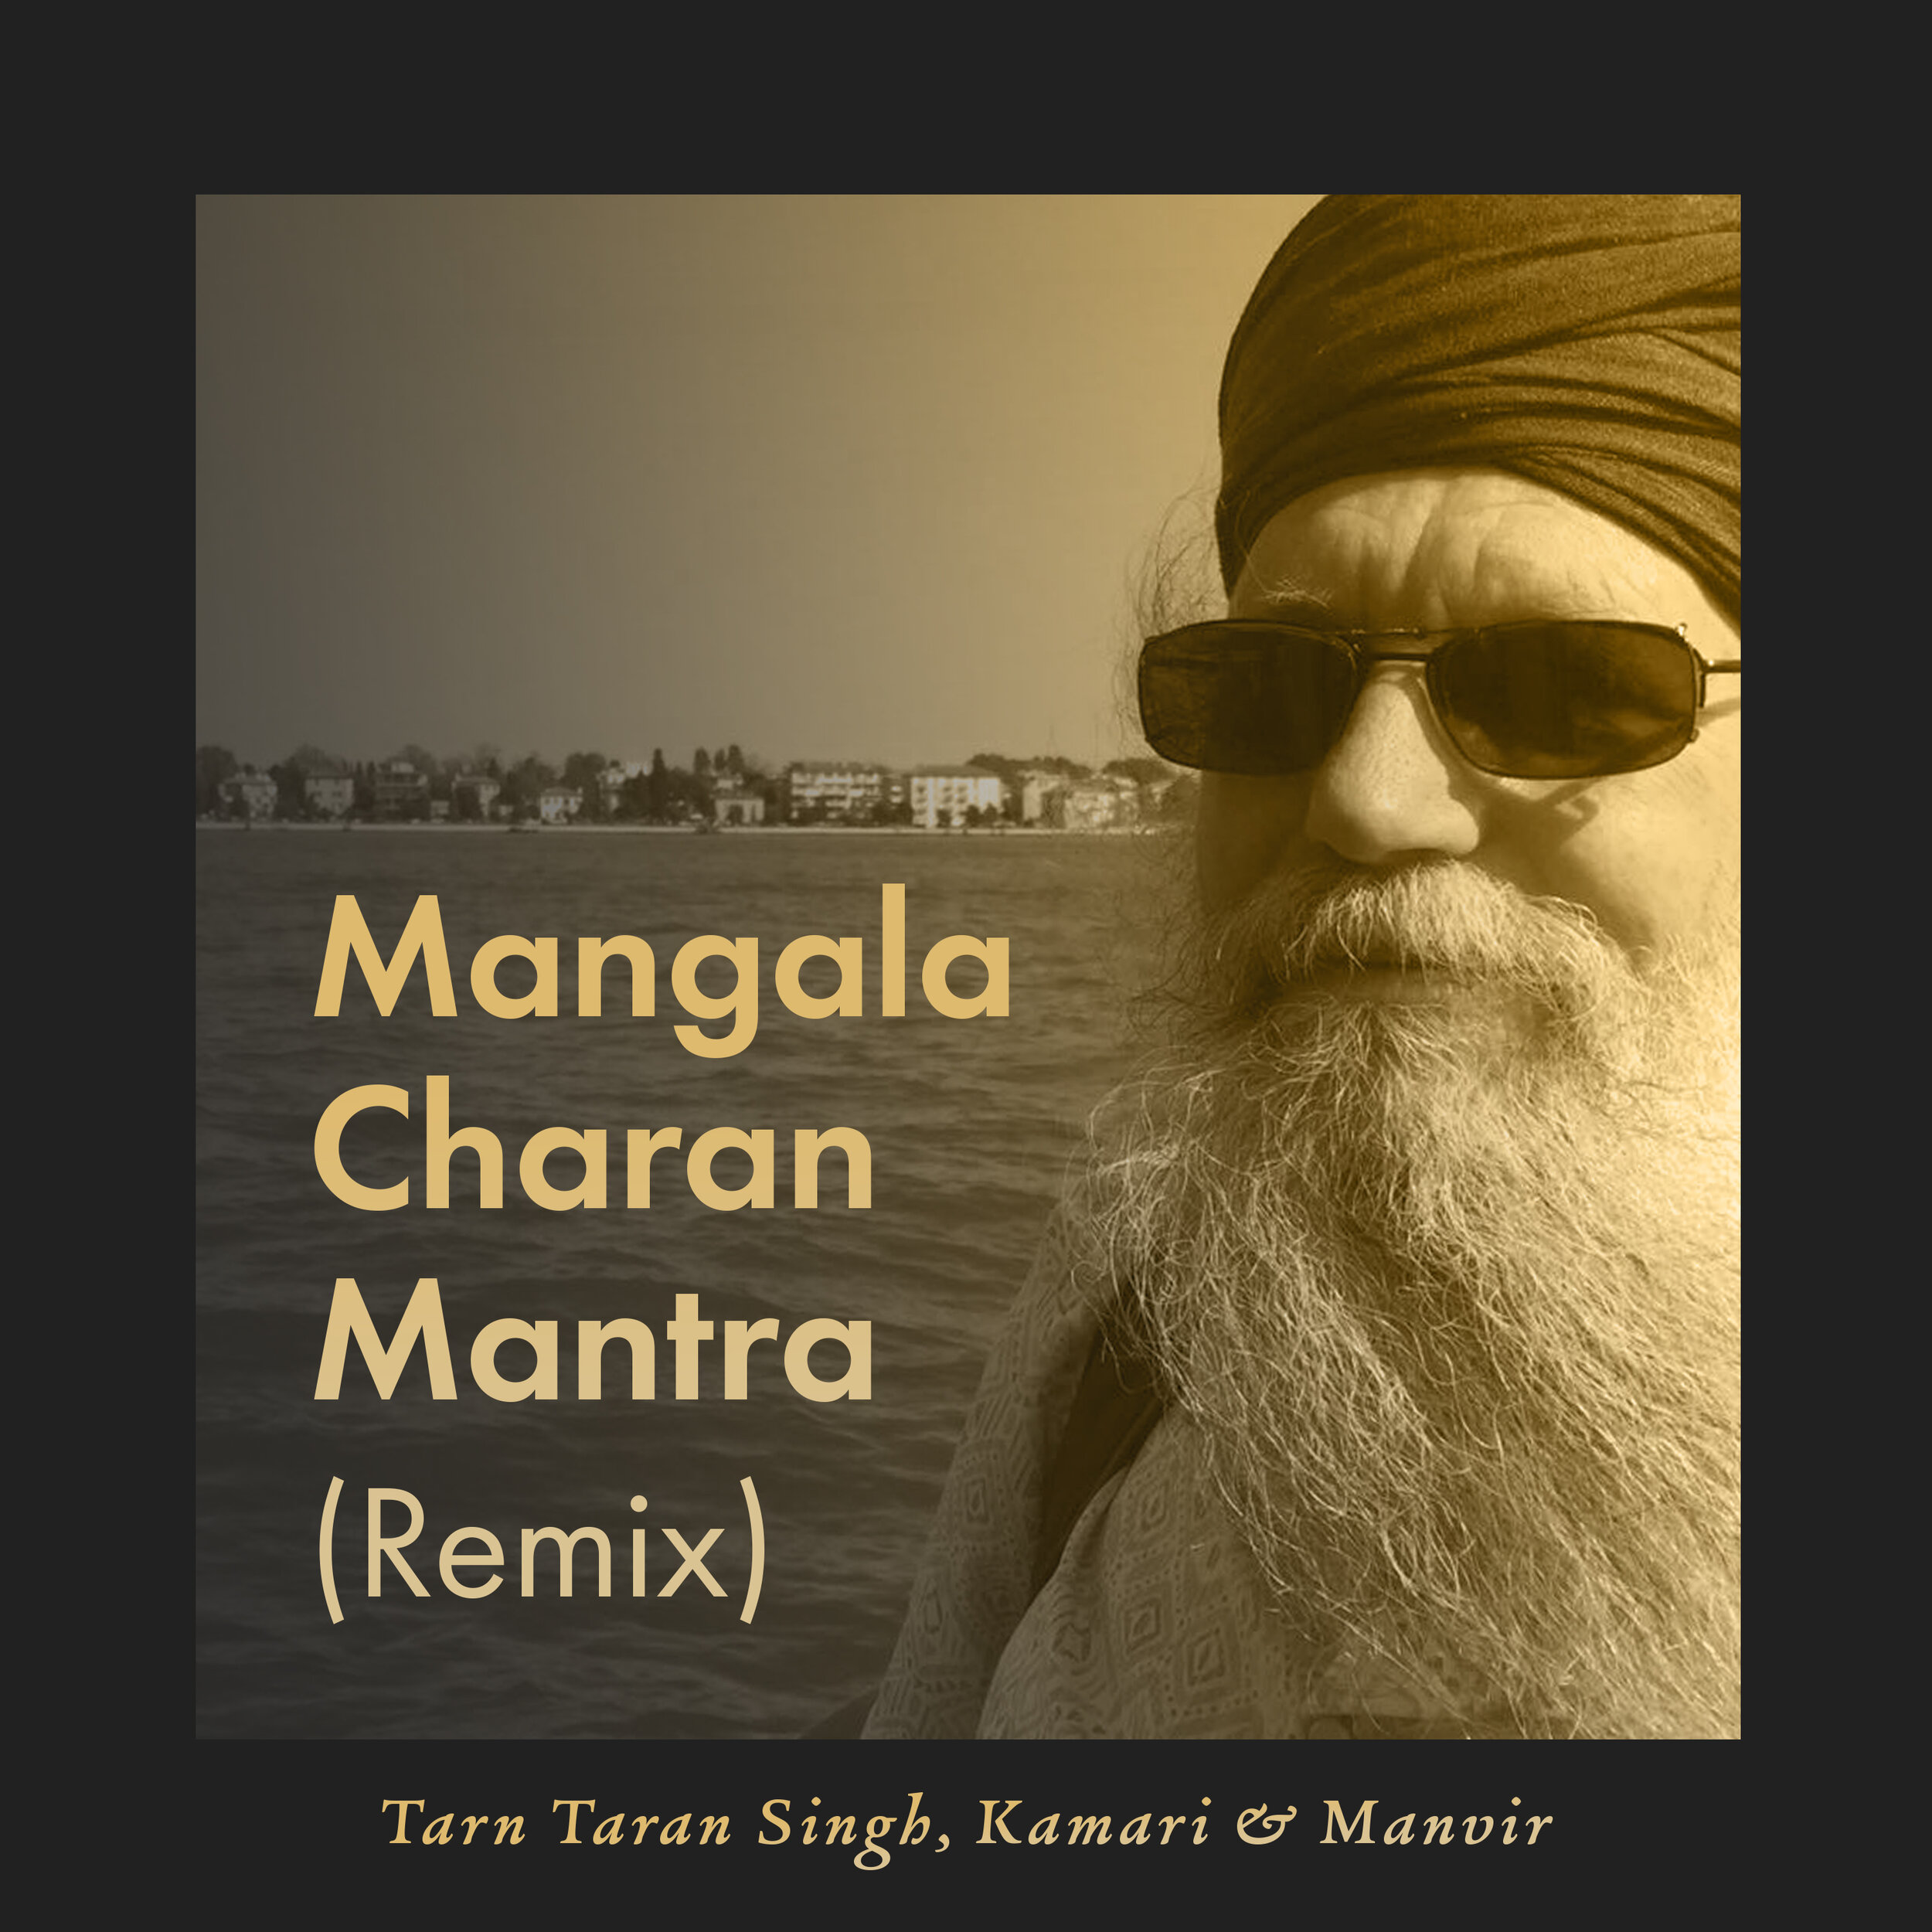 Mangala Charan Mantra